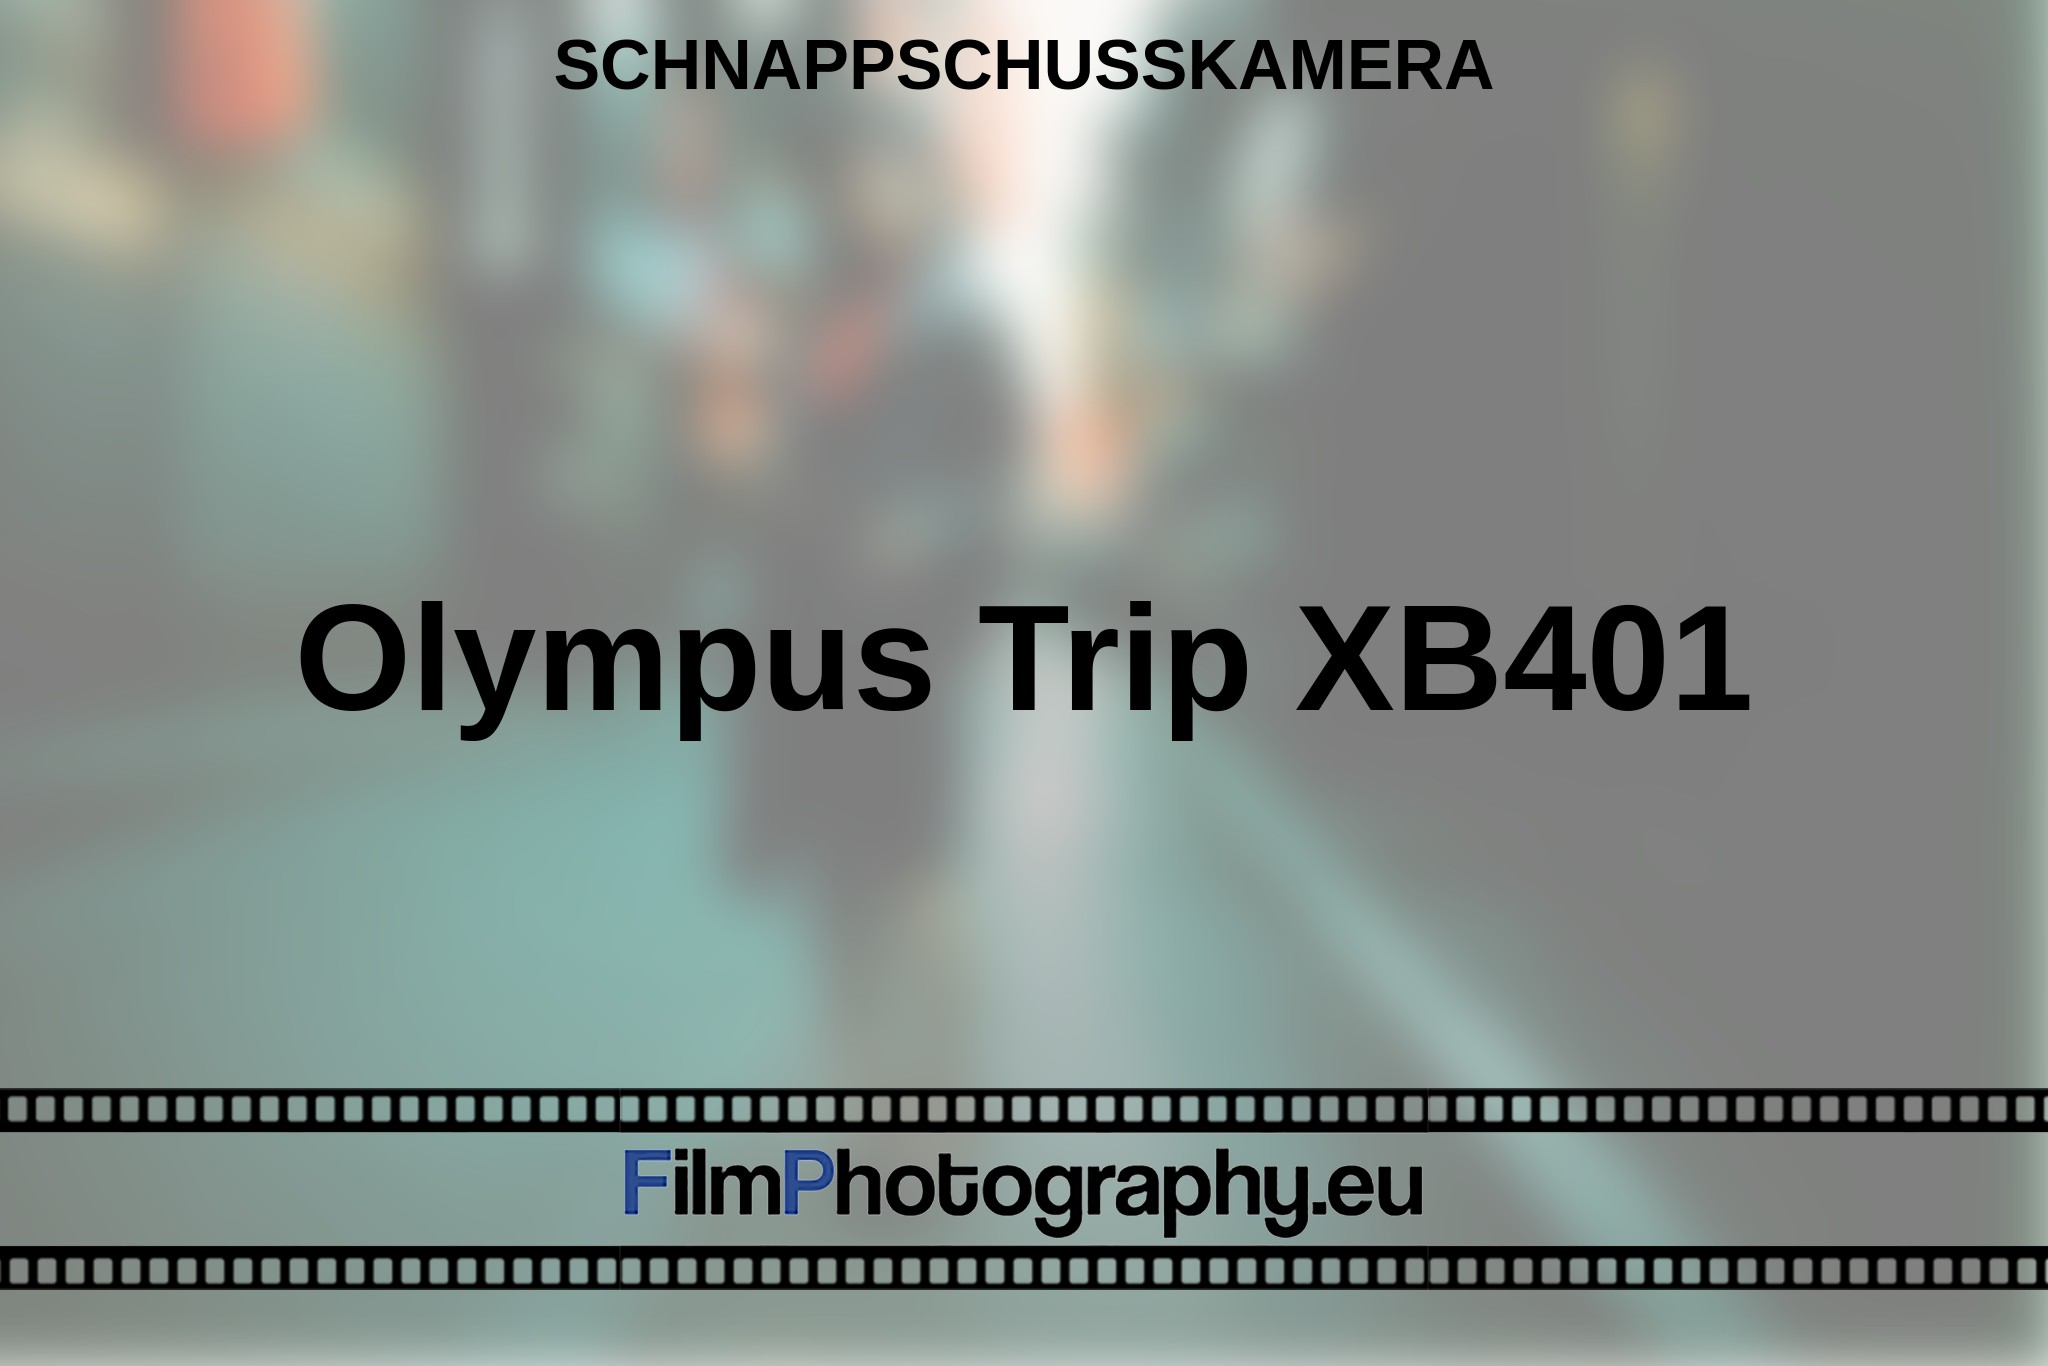 olympus-trip-xb401-schnappschusskamera-bnv.jpg